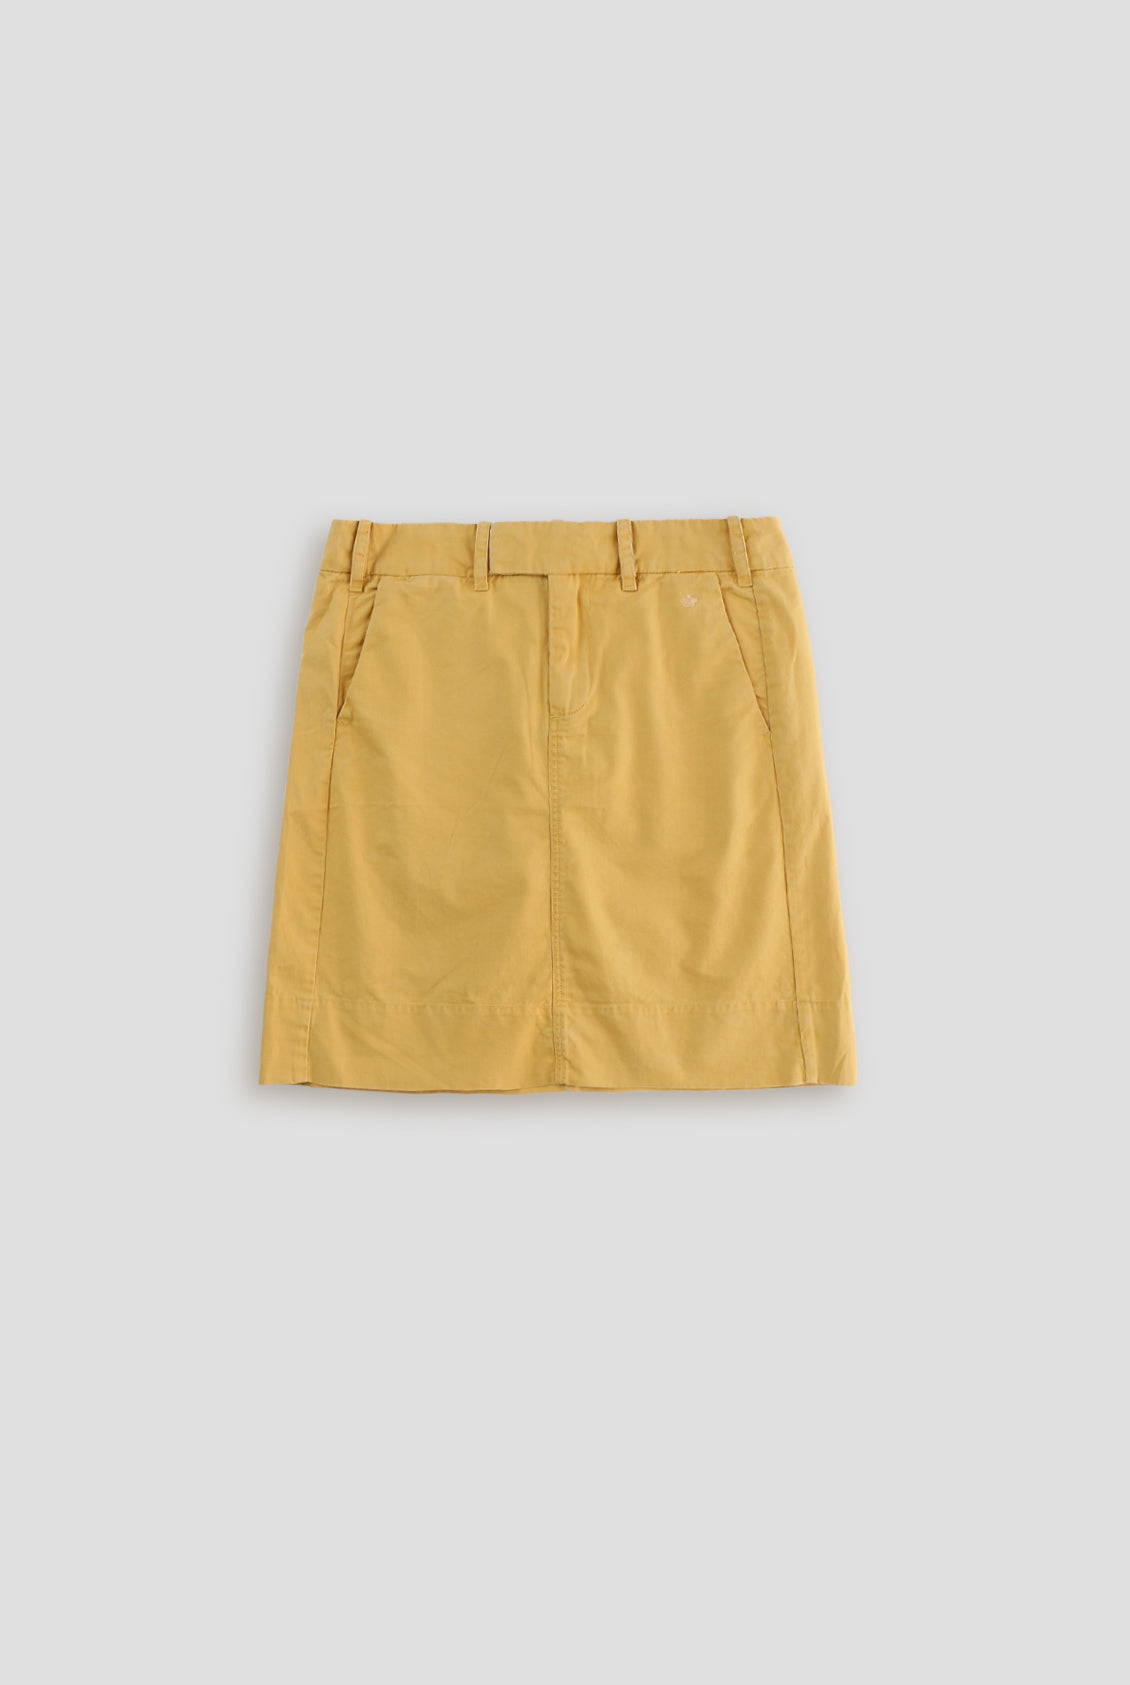 G1 Goods Everyday Skirt in Yellow